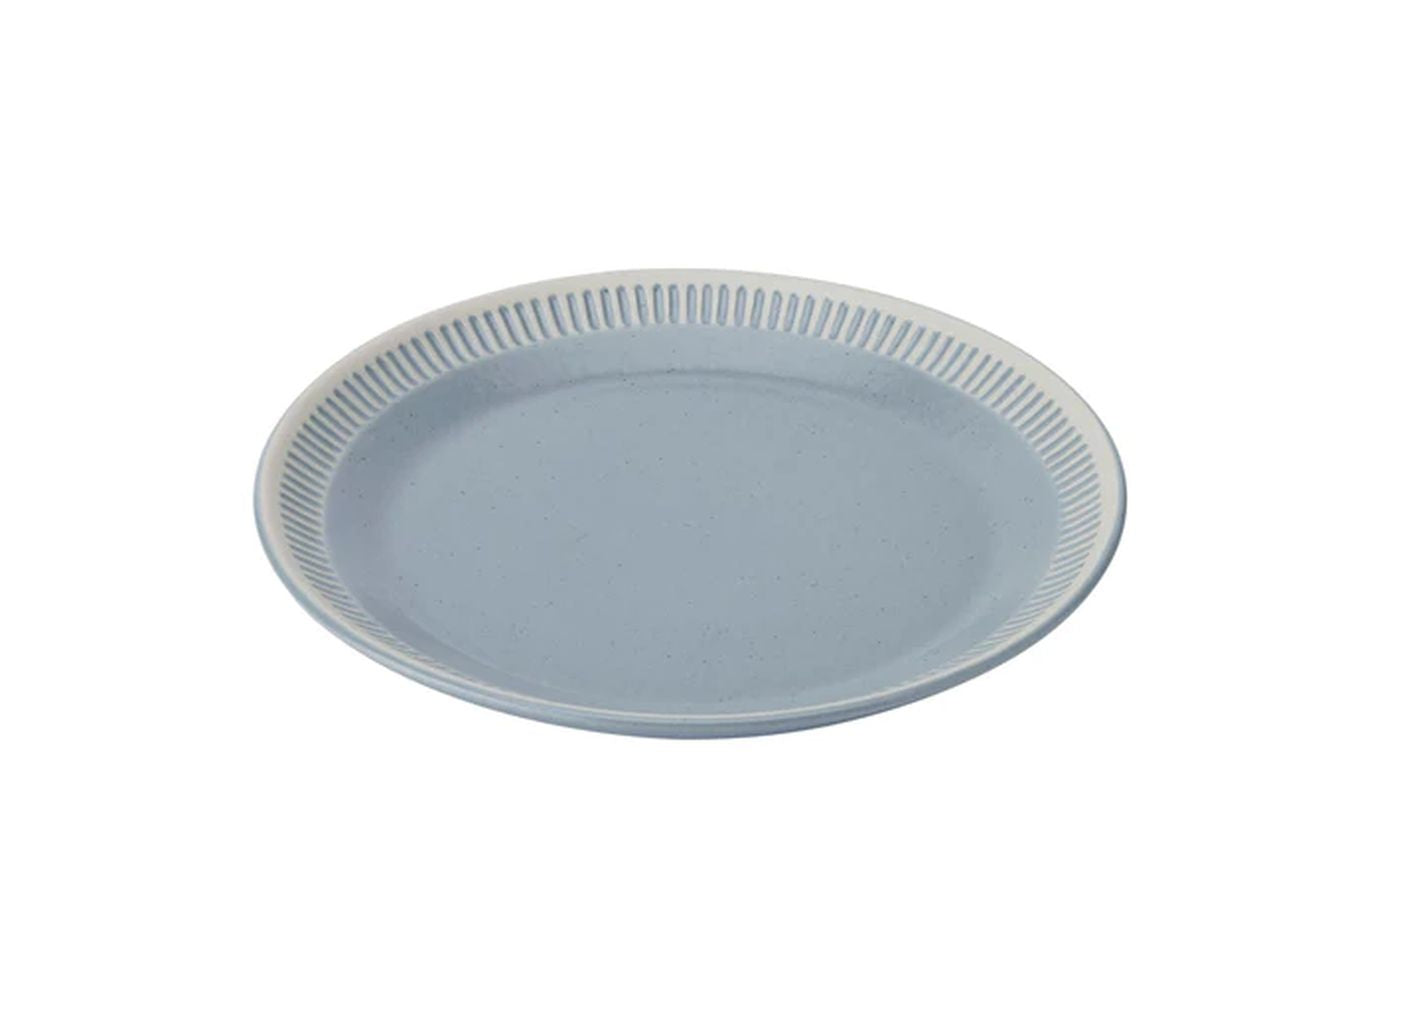 Knabstrup Keramik Colorit Plate ø 19 Cm, Grey